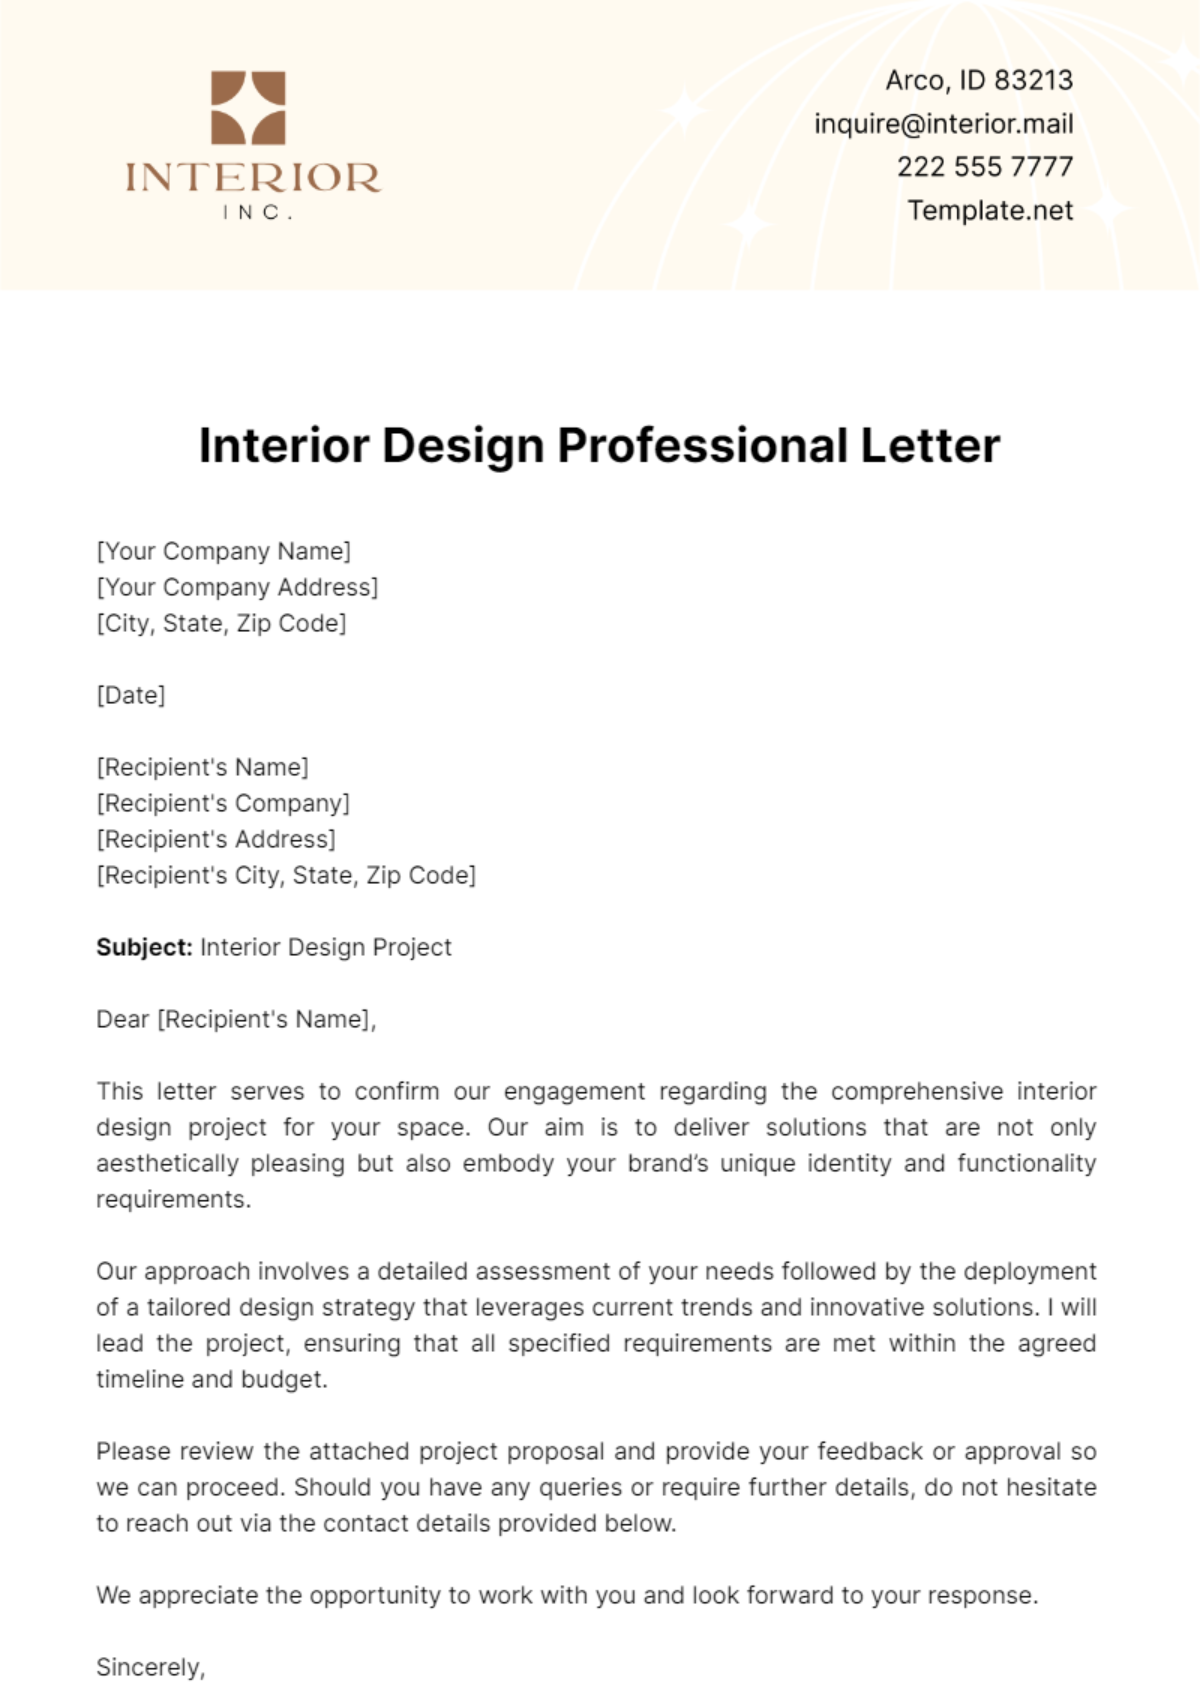 Interior Design Professional Letter Template